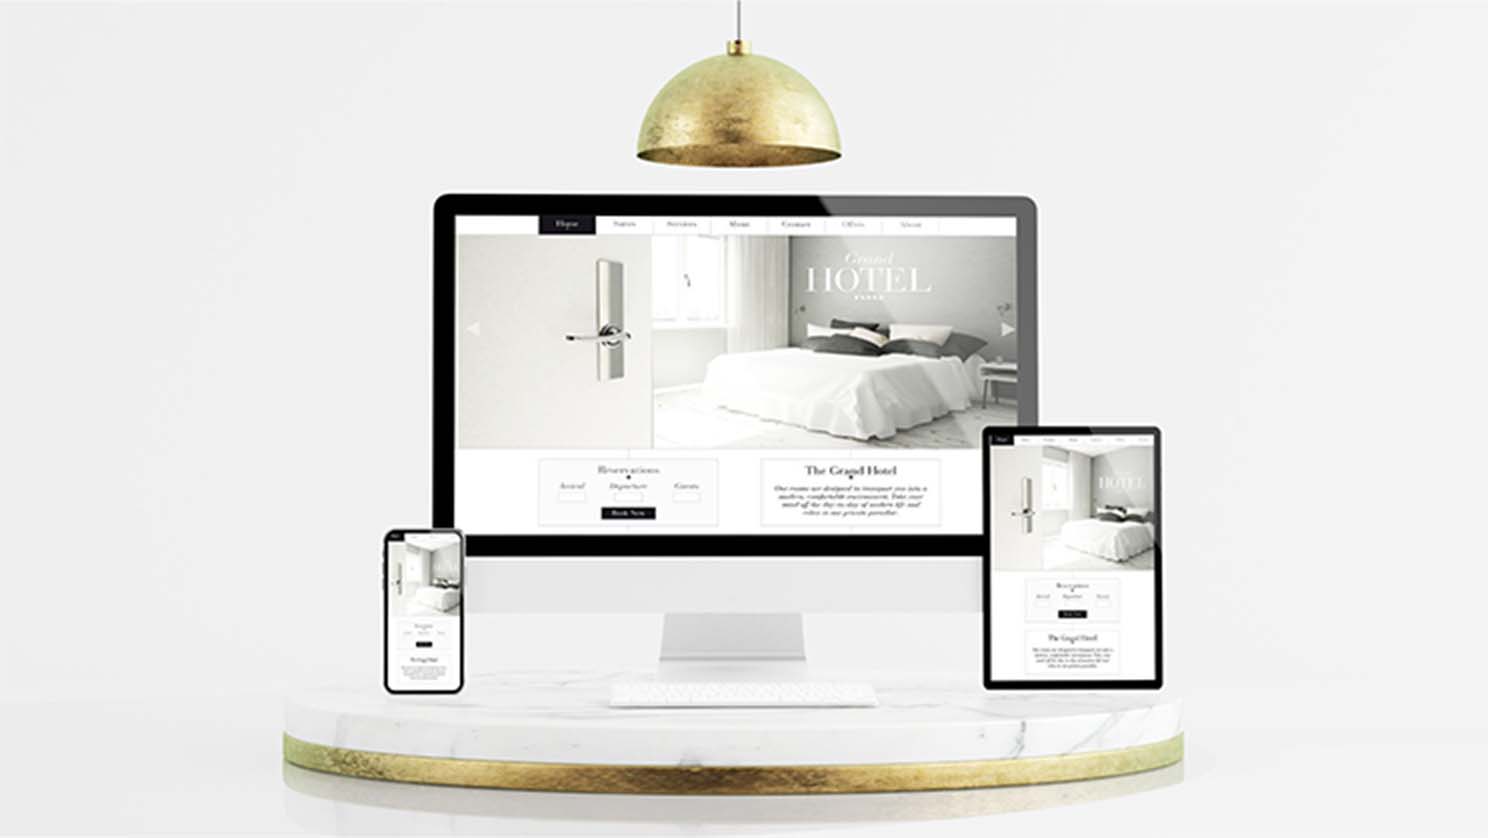 Quality Hotel Website Image